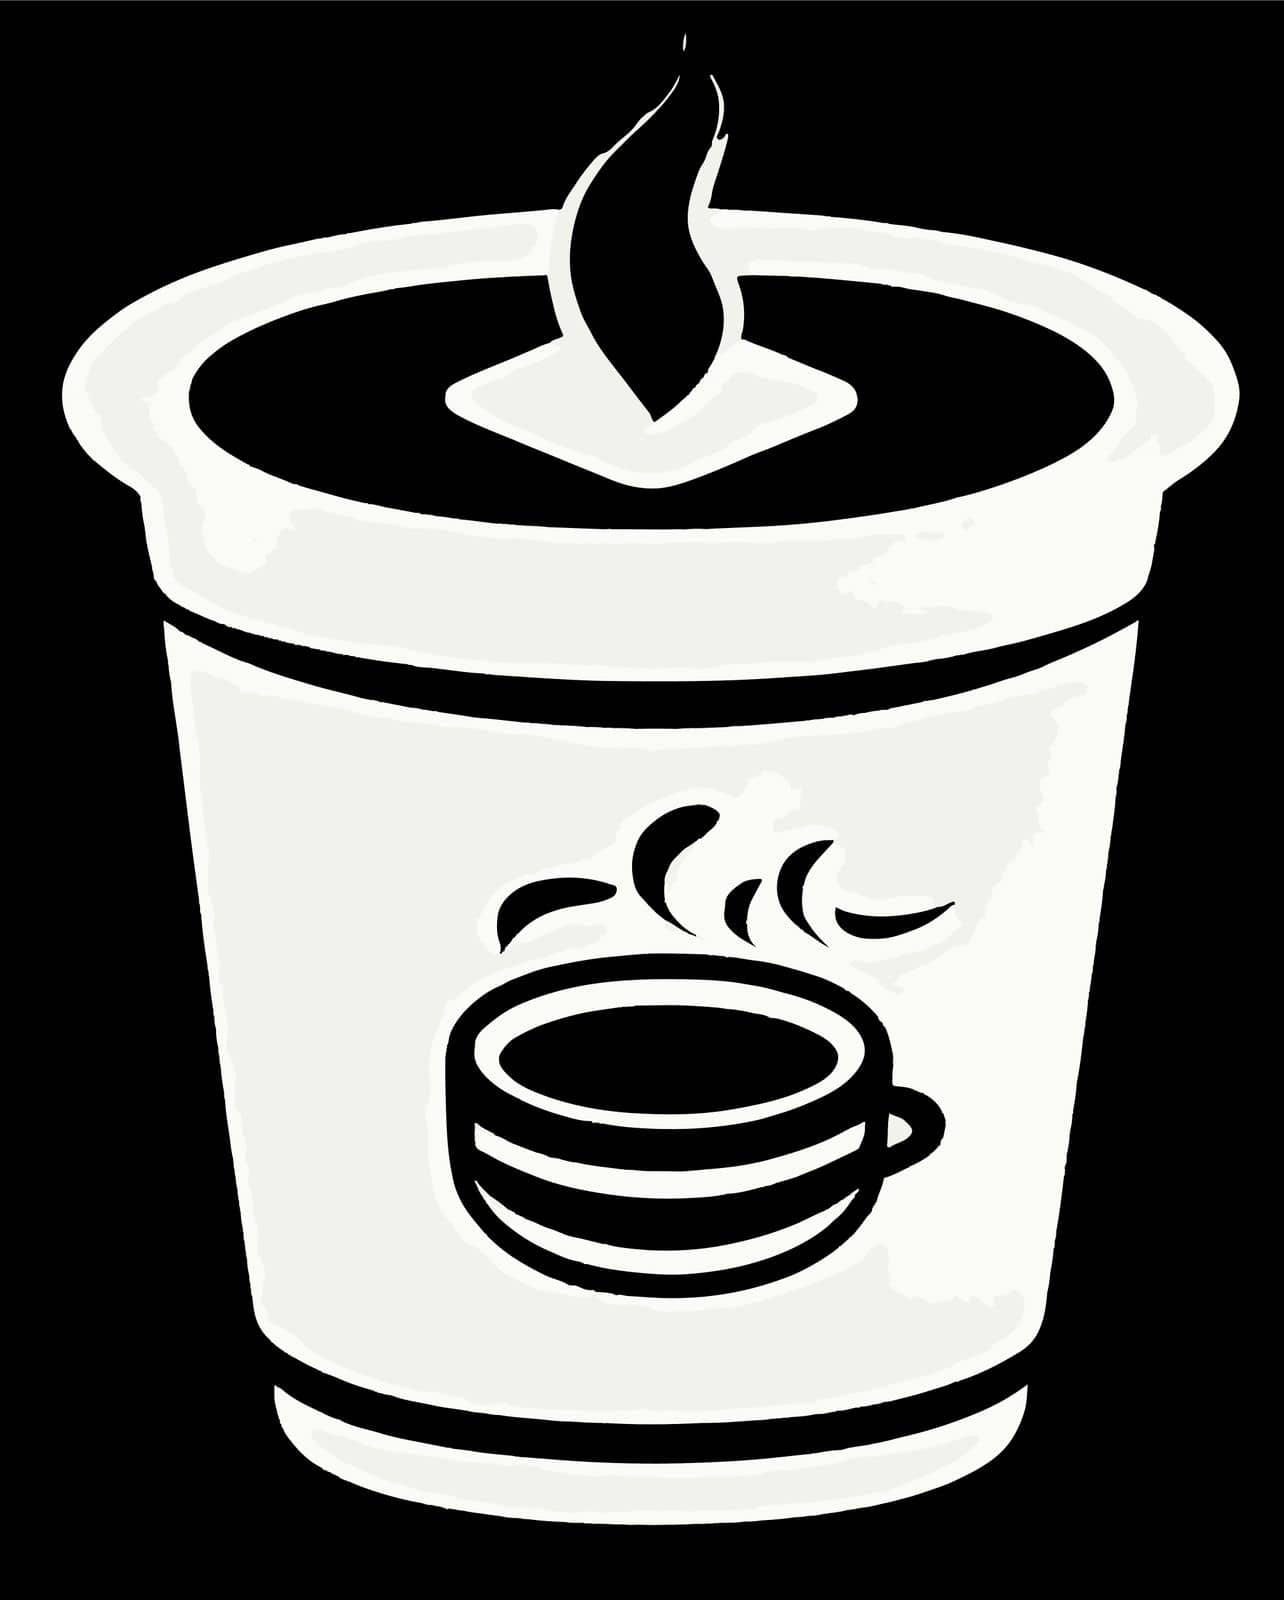 ready to drink hot coffee. vector illustration. by yilmazsavaskandag